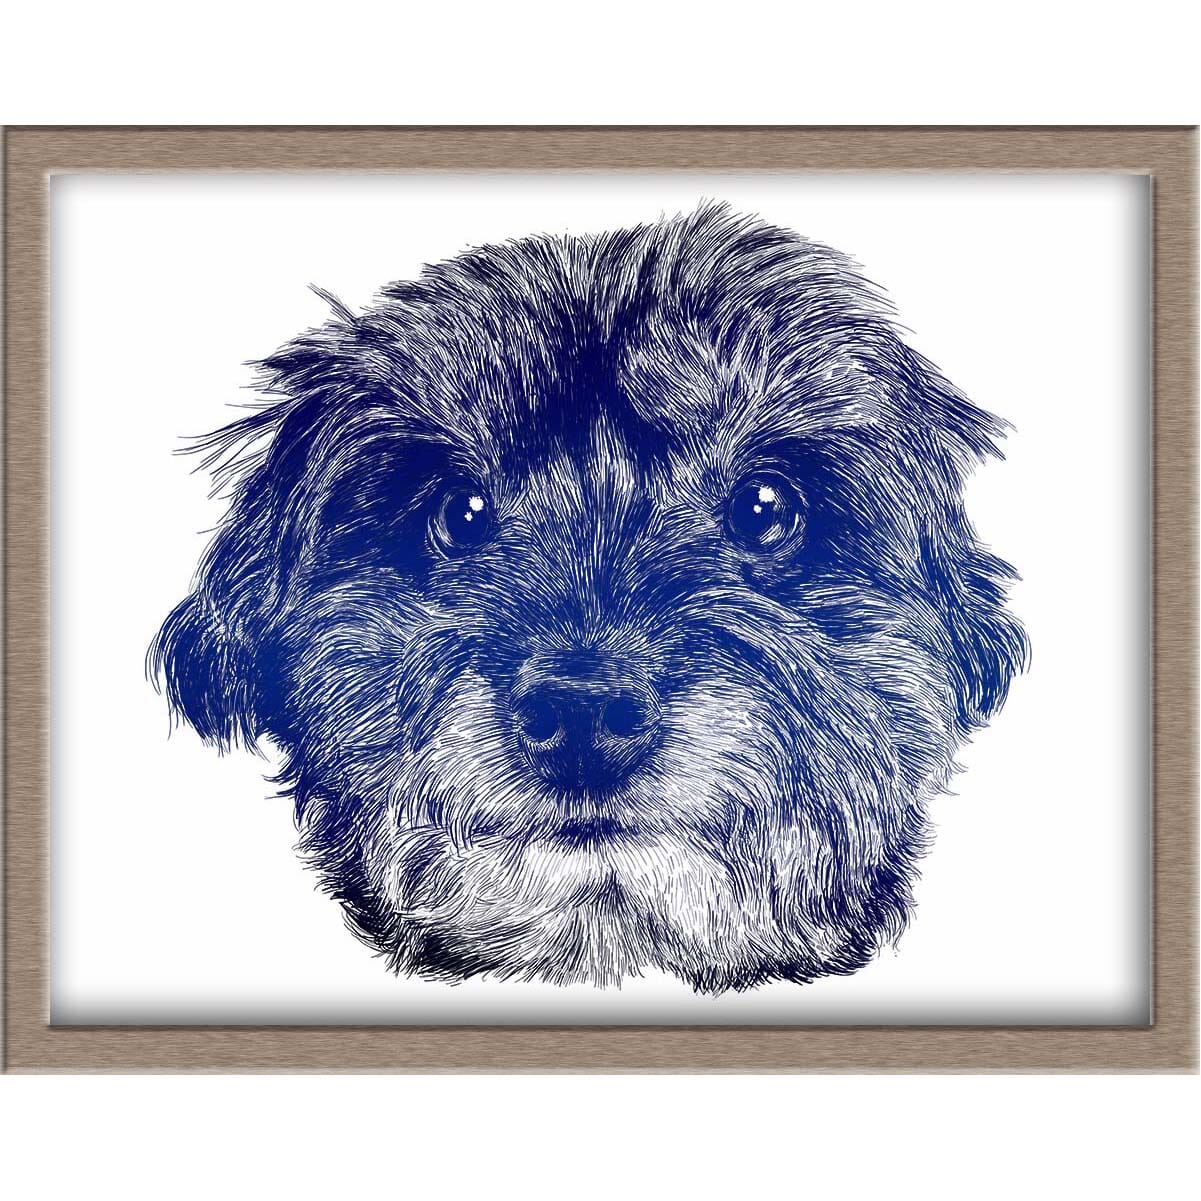 Handsome Dog Foiled Print (Jet) Posters, Prints, & Visual Artwork JoyousJoyfulJoyness 